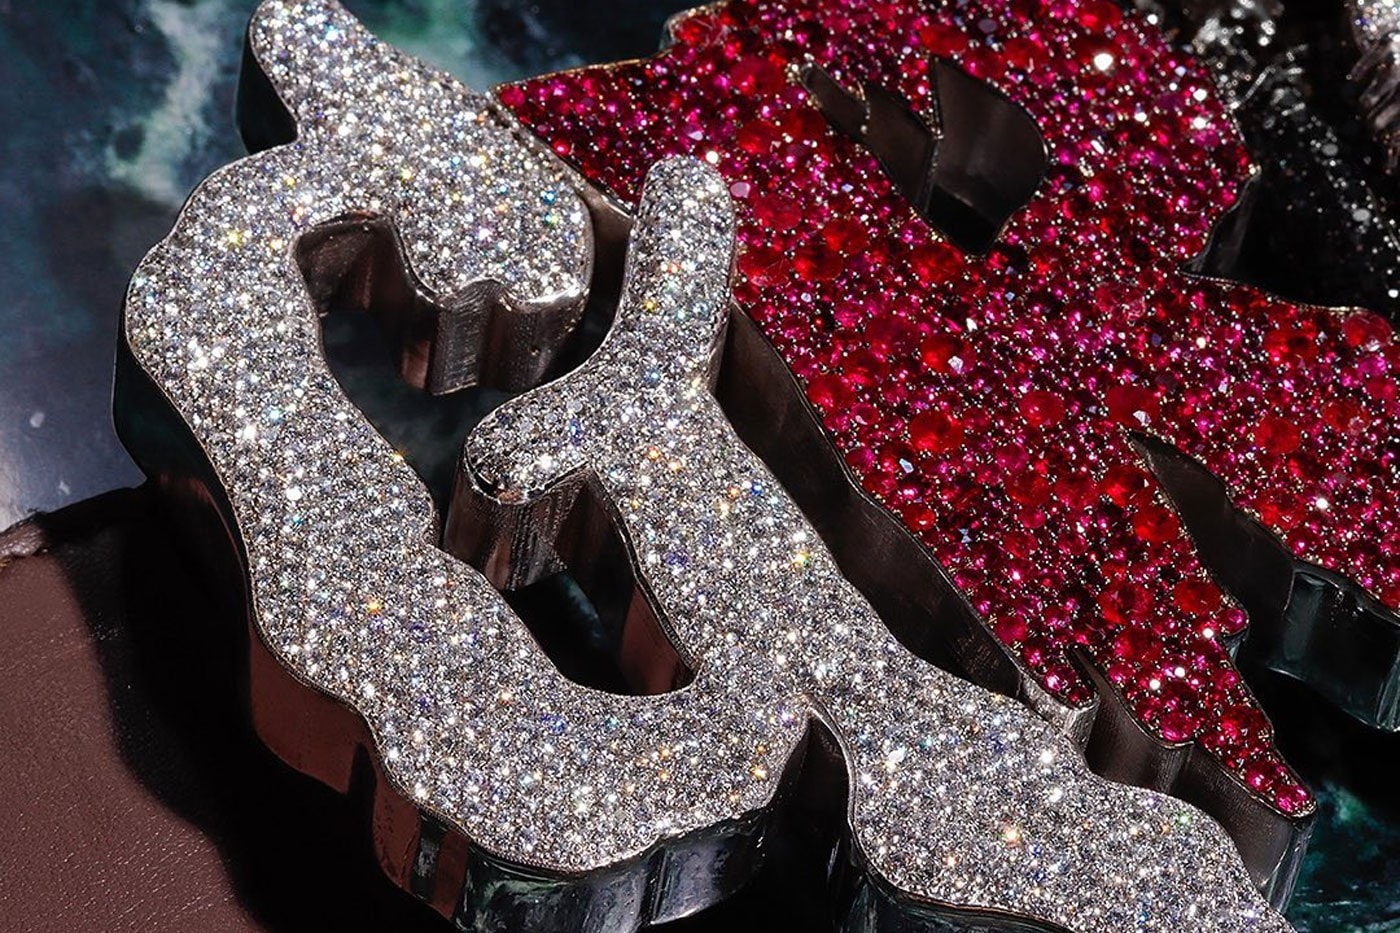 Alex Moss New York 為 A$AP Rocky 打造要價 32 萬美元的珠寶皮帶扣